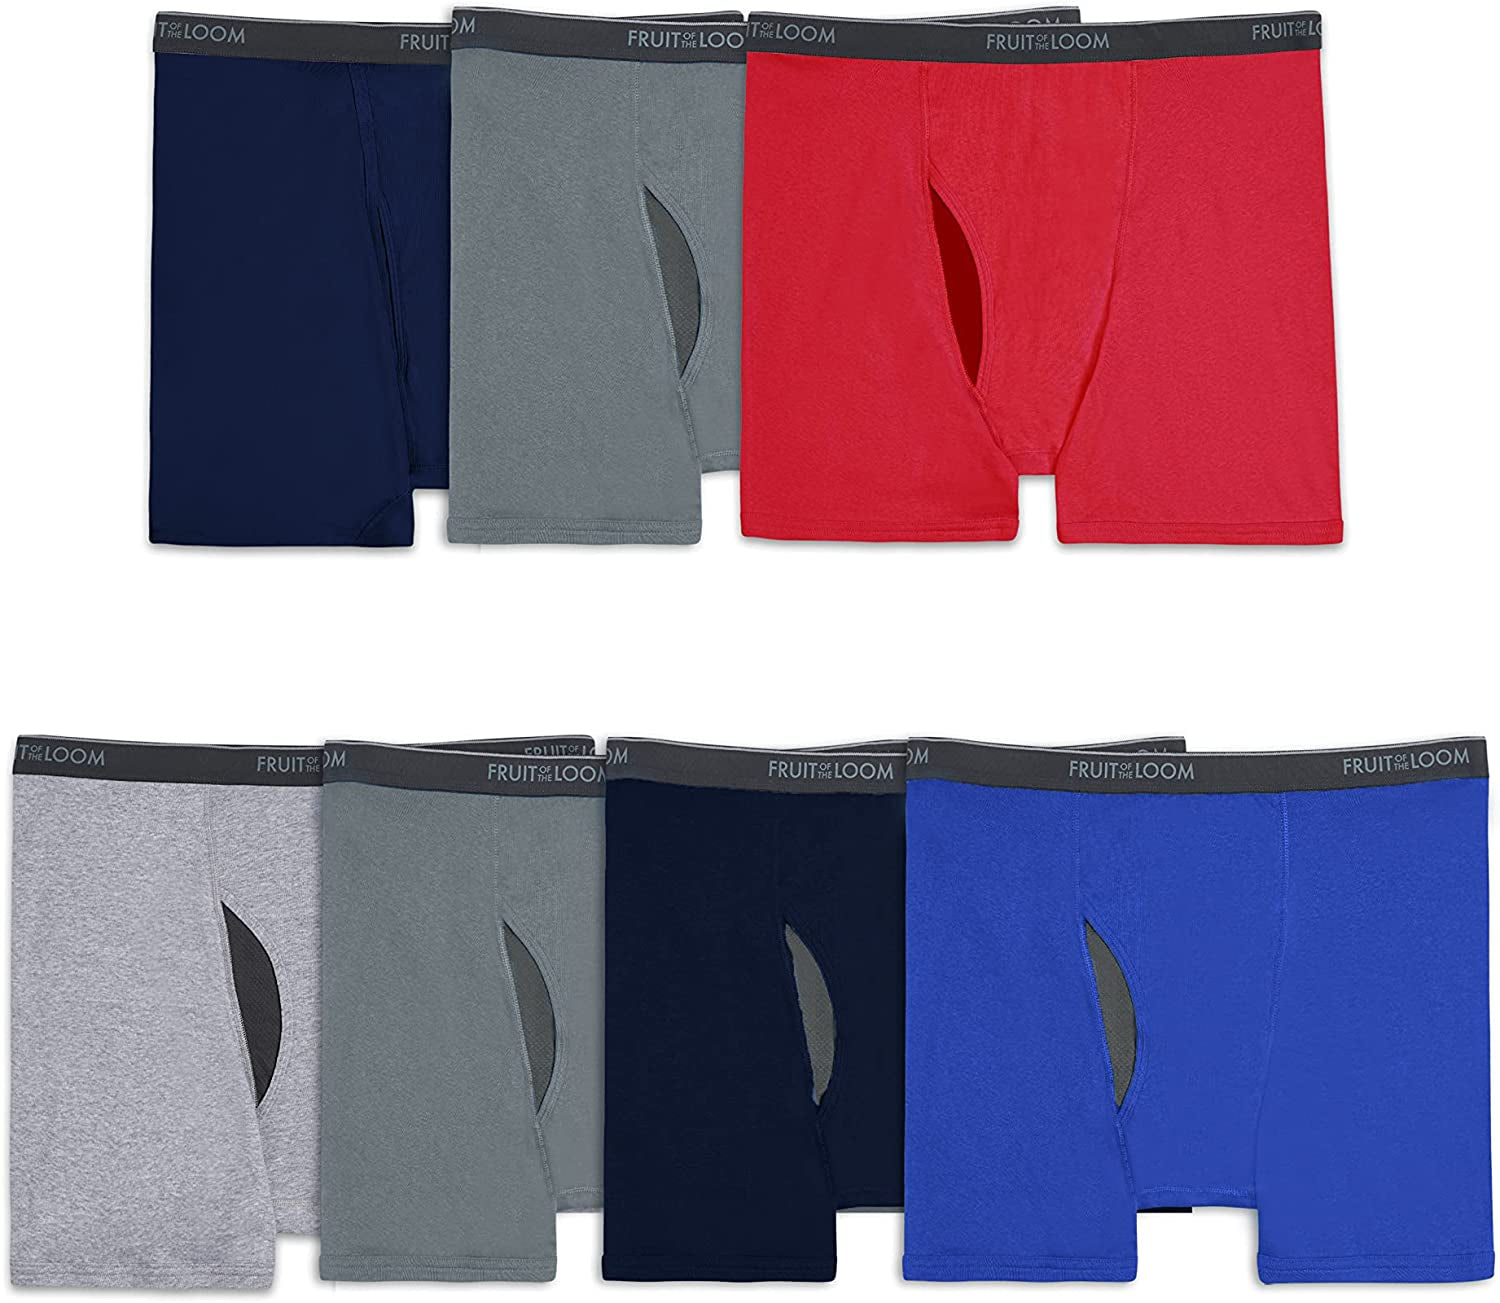 Men'S Coolzone Boxer Briefs (Assorted Colors)